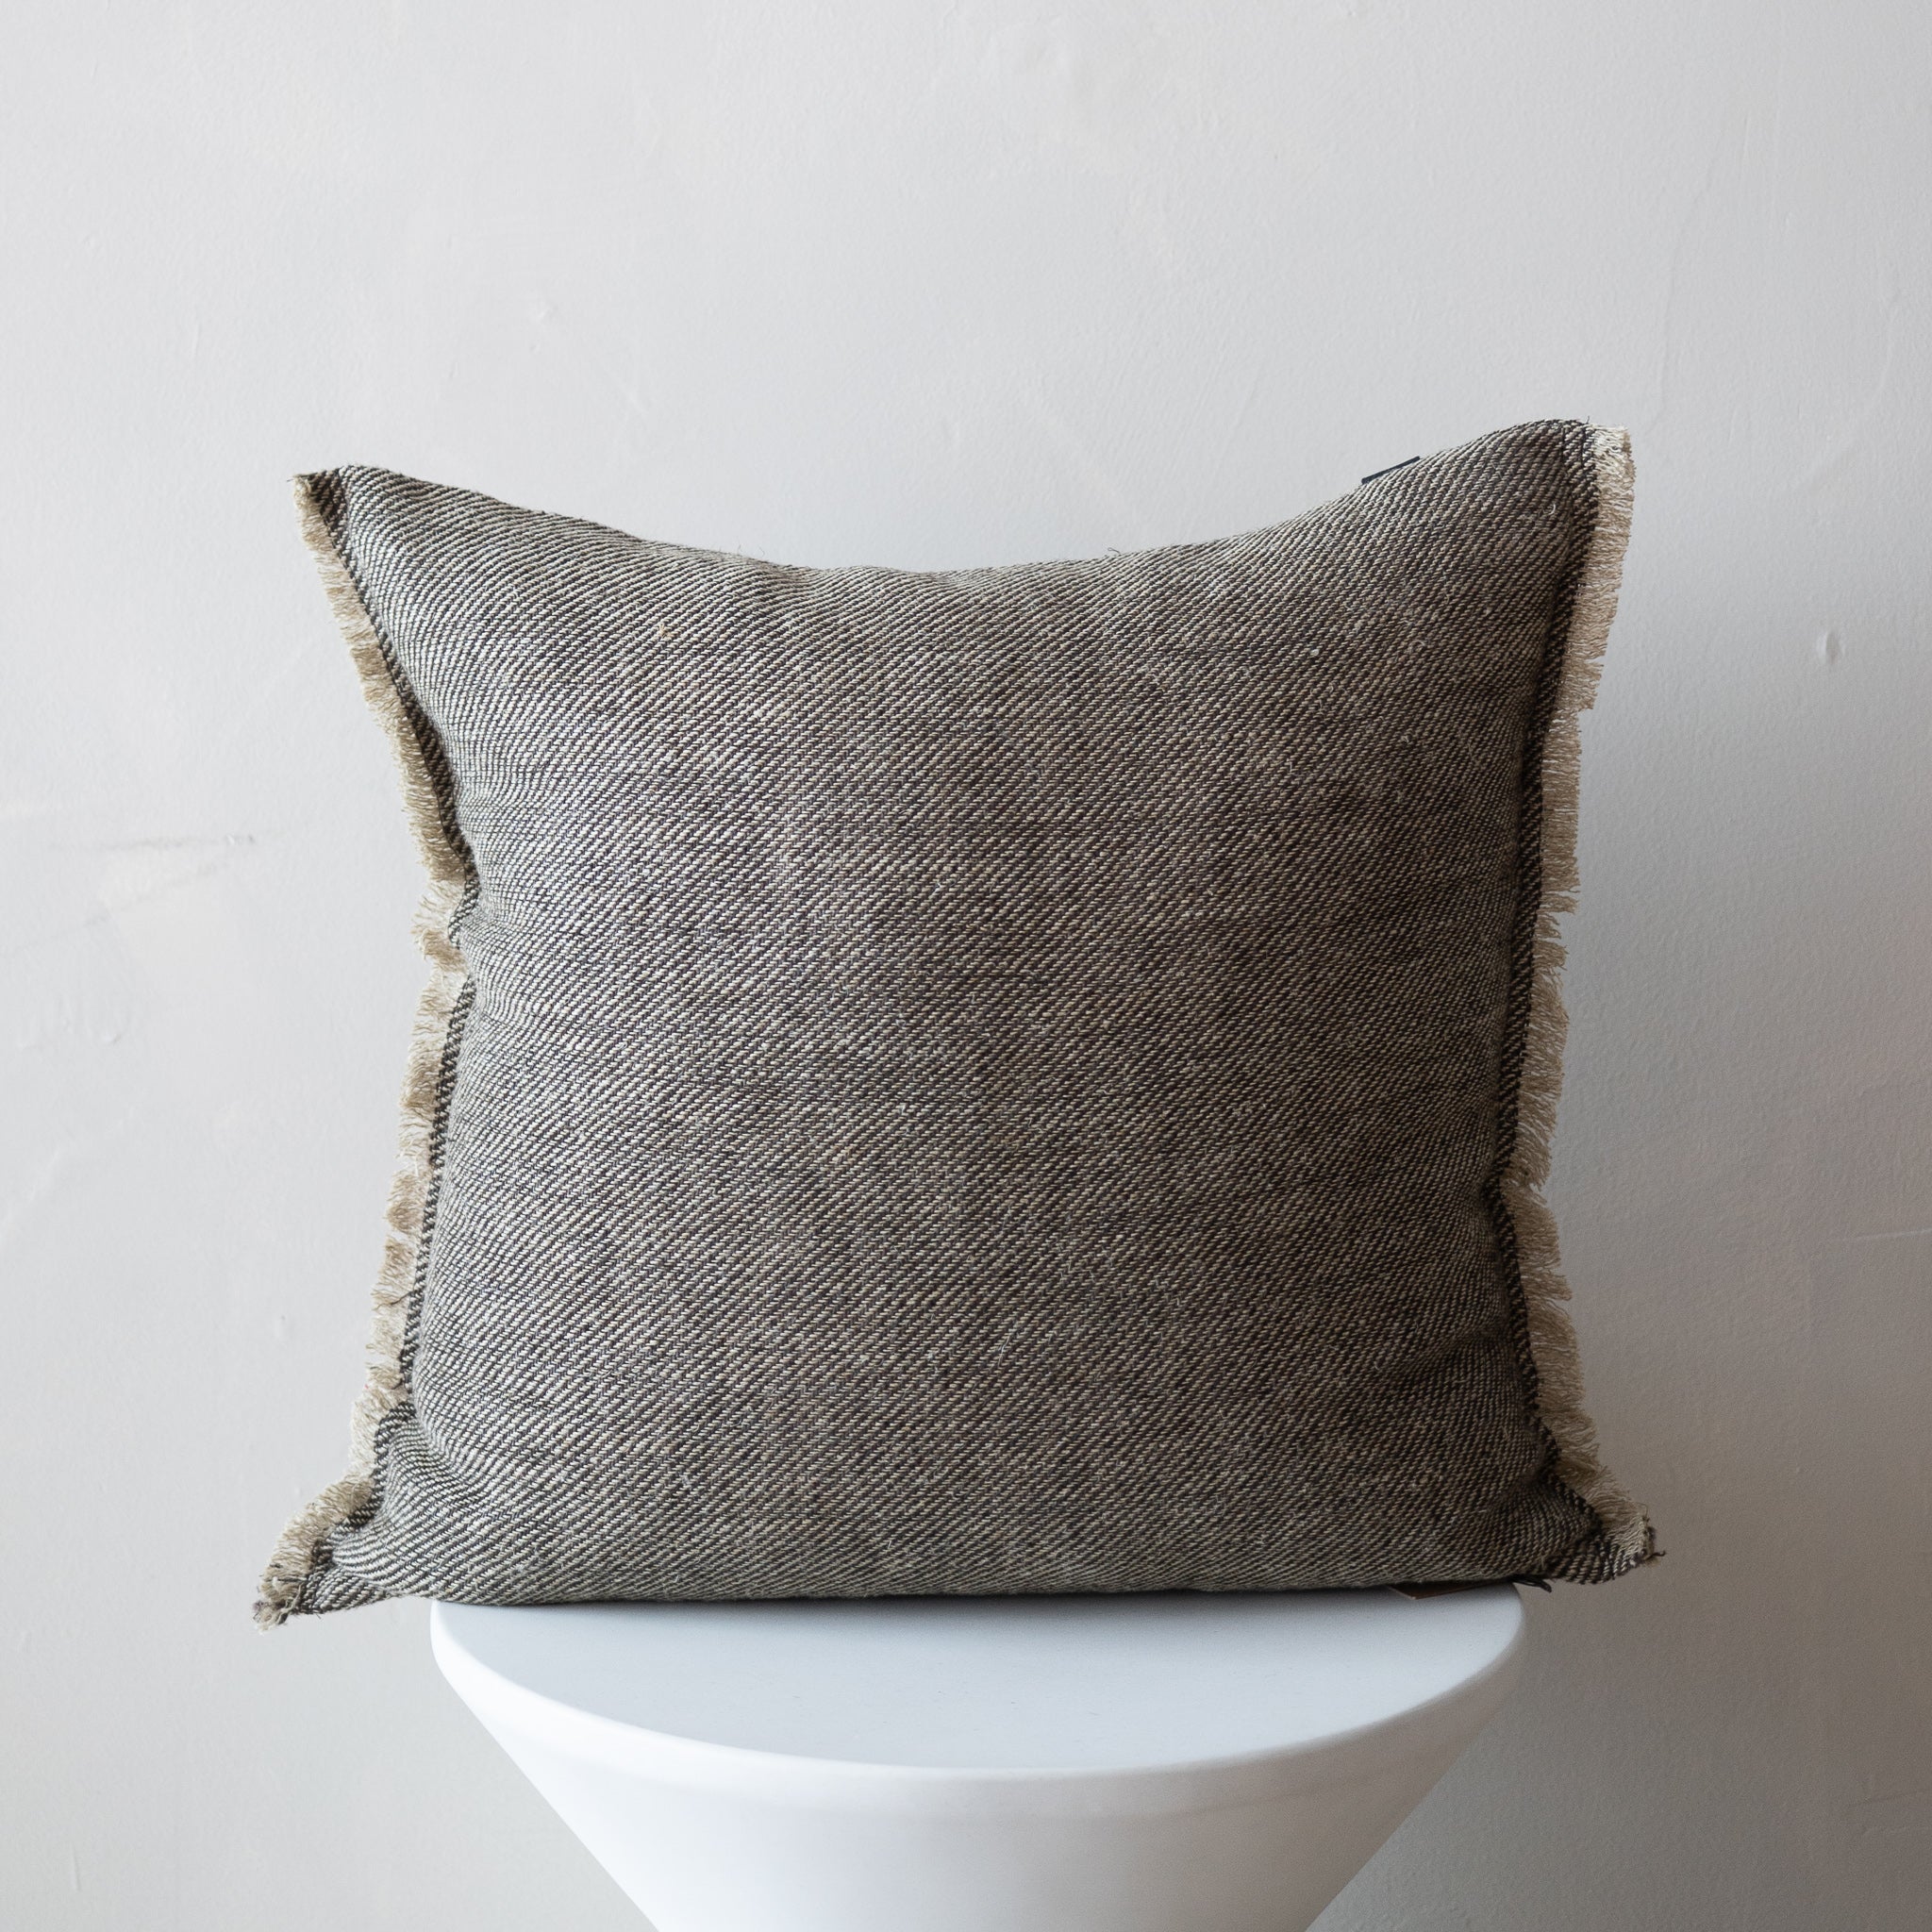 Flax Linen Decorative Pillow - Charcoal